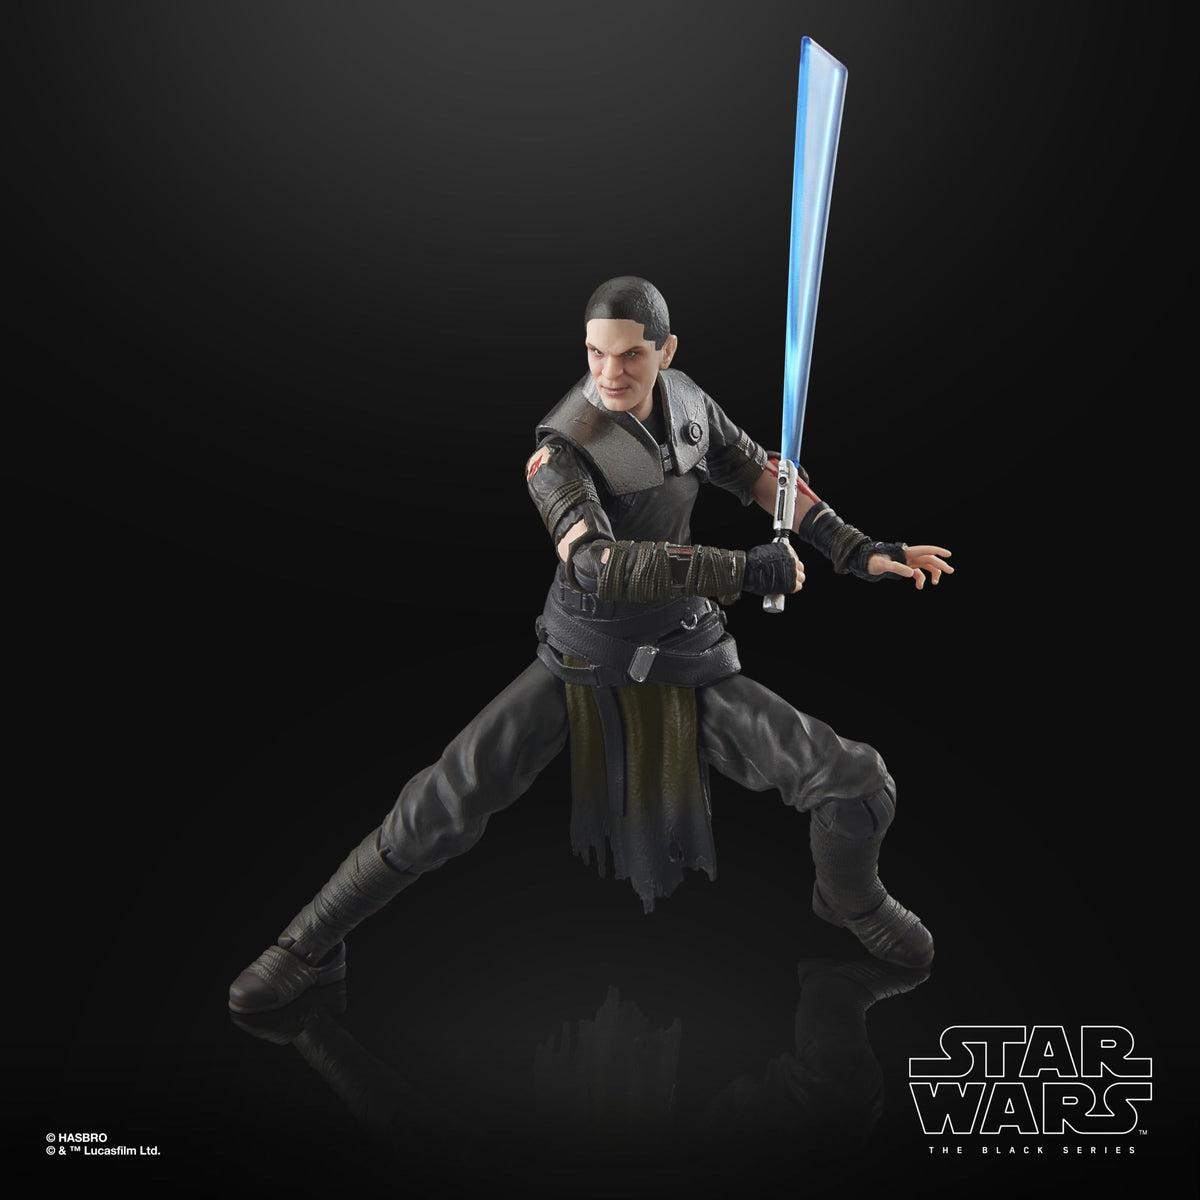 Stronox Custom Figures: Star Wars Black Series: Starkiller